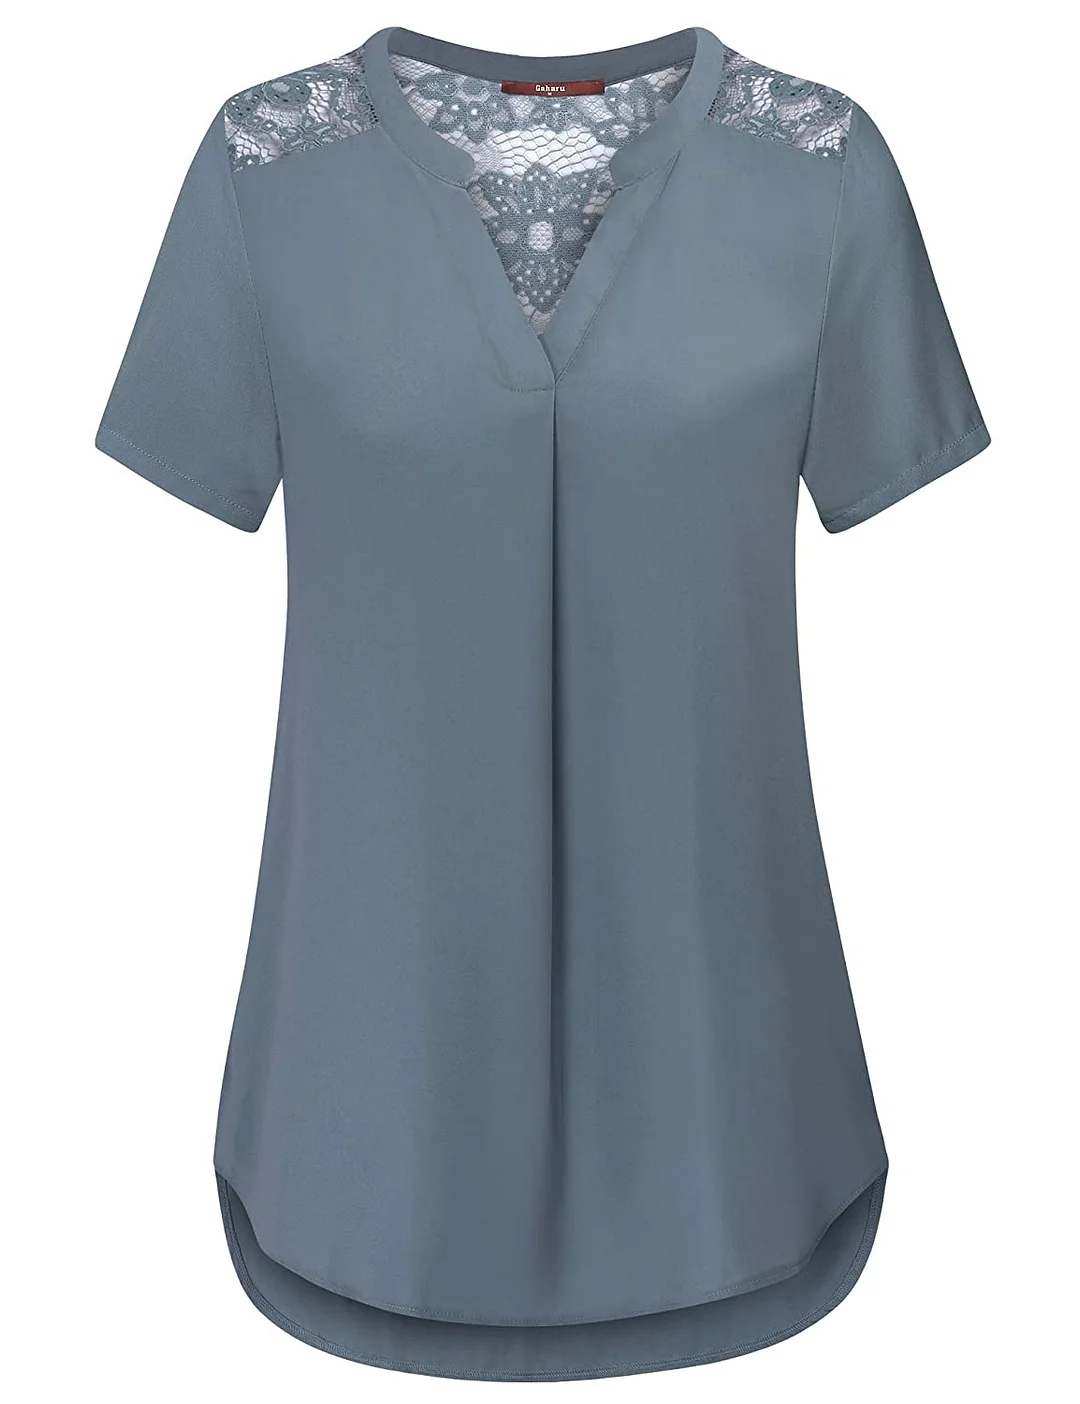 Women's Notch V Neck Short Sleeve Chiffon Shirts Casual Lace Blouse Top